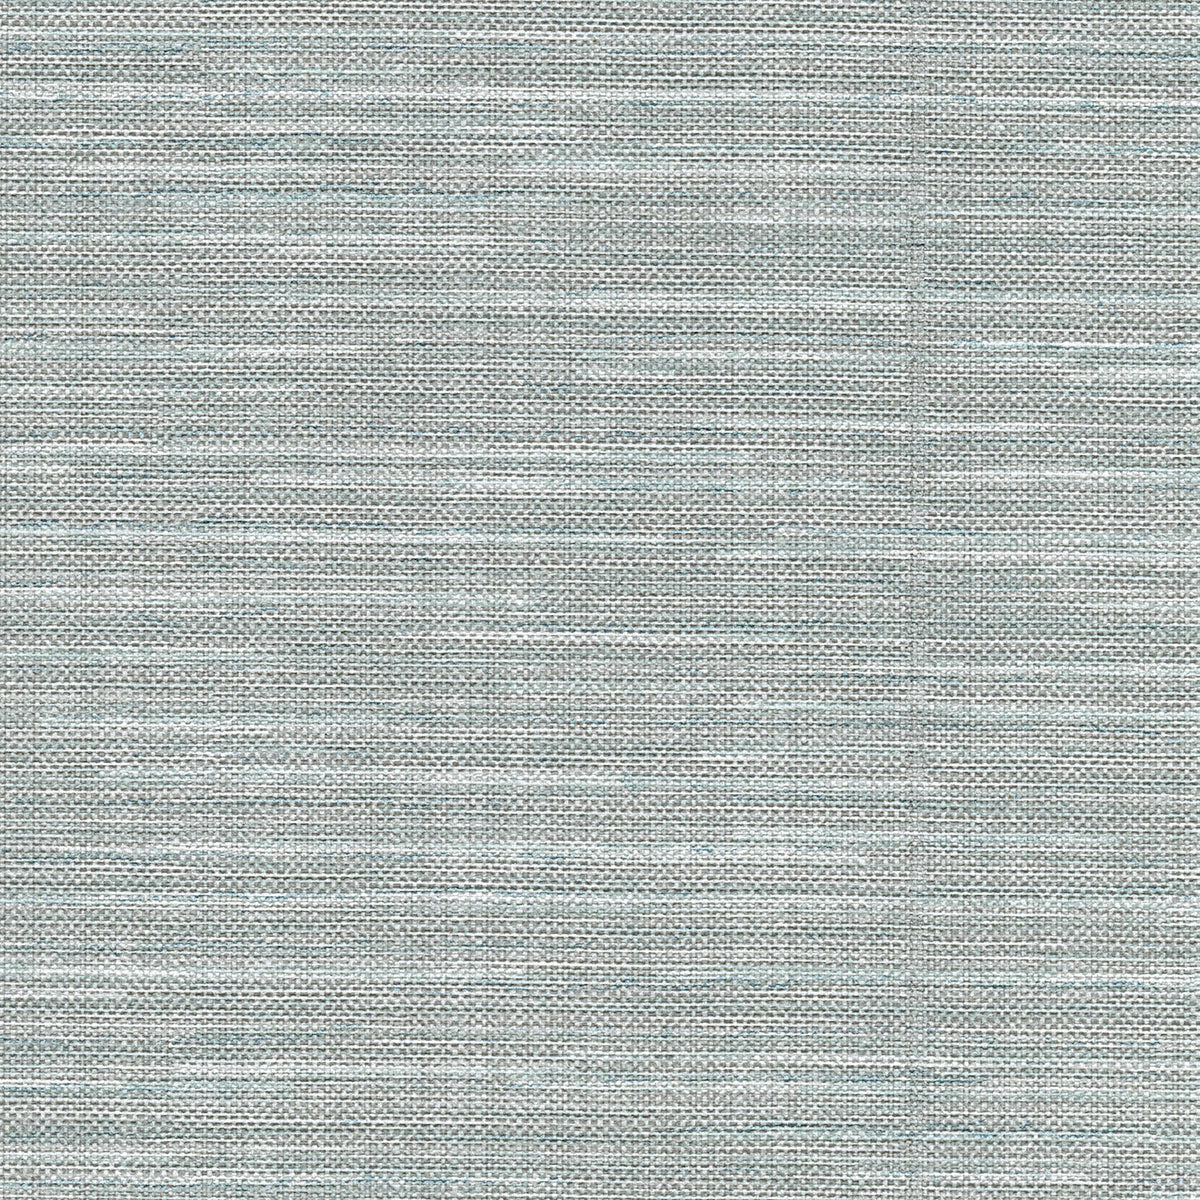 2984-8017 Warner XI Naturals & Grasscloths, Bay Ridge Blue Faux Grasscloth Wallpaper Blue - Warner